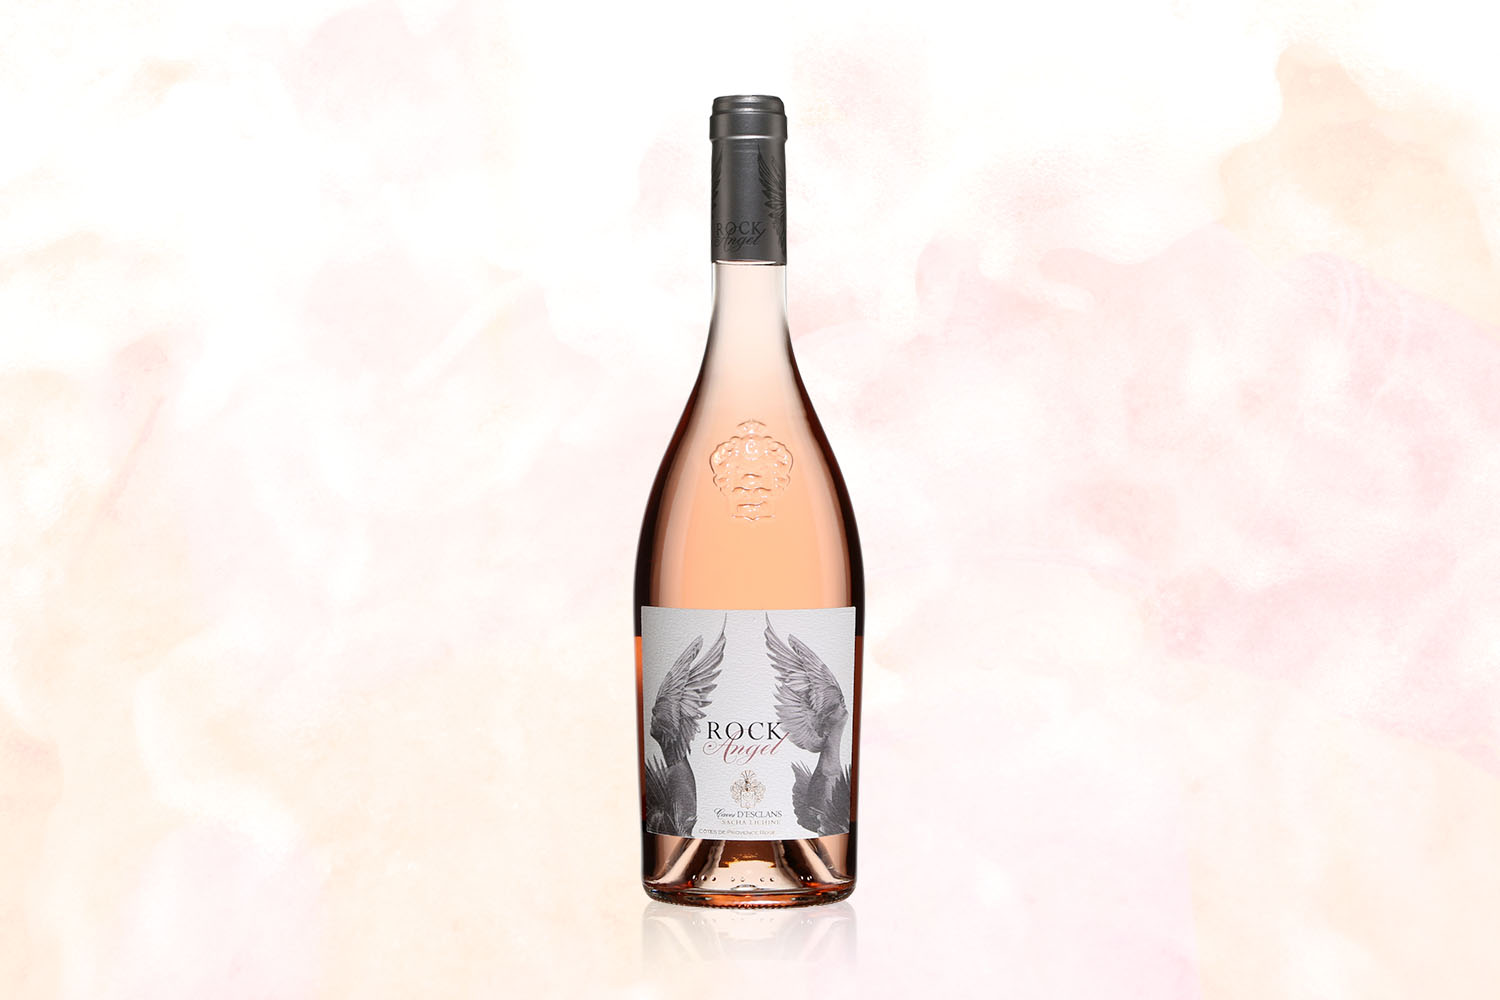 A bottle of Rock Angel Rosé on a pale pink background